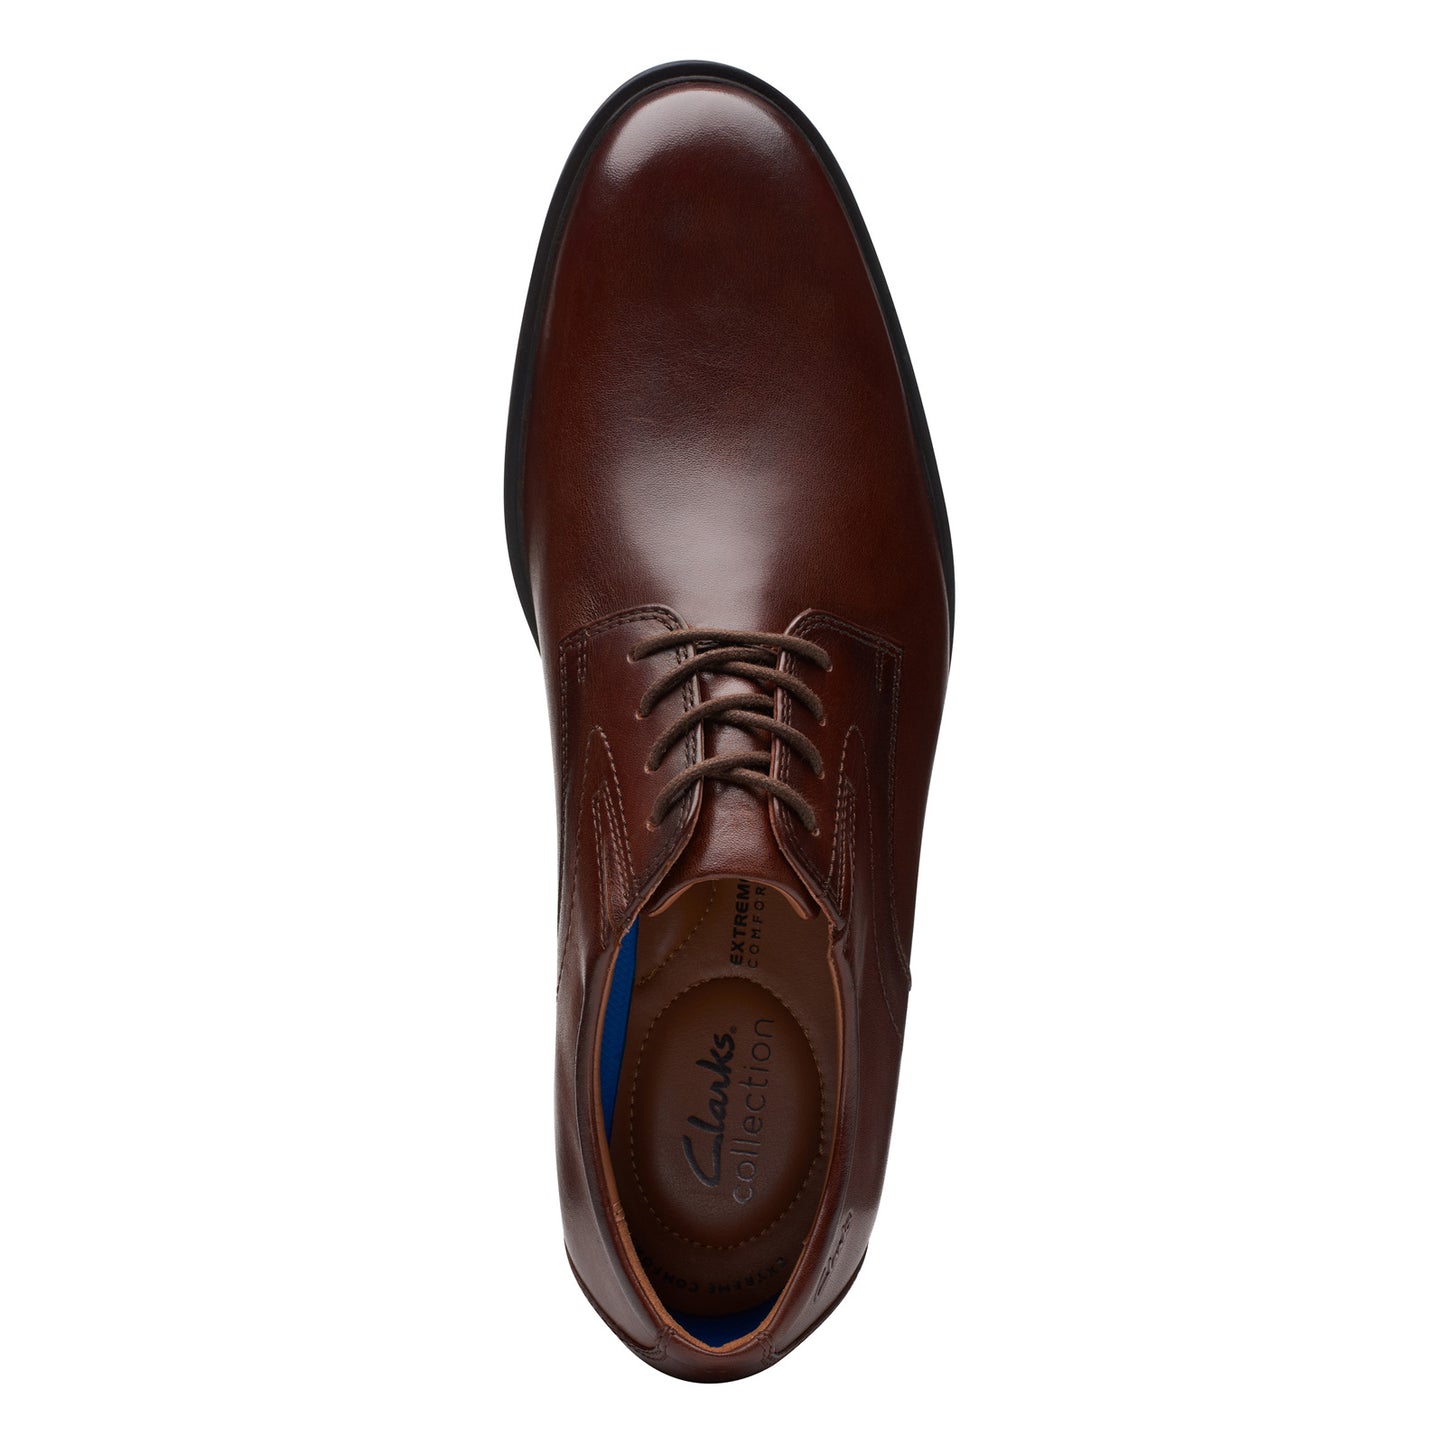 Peltz Shoes  Men's Clarks Whiddon Plain Oxford Mahogany 26174473